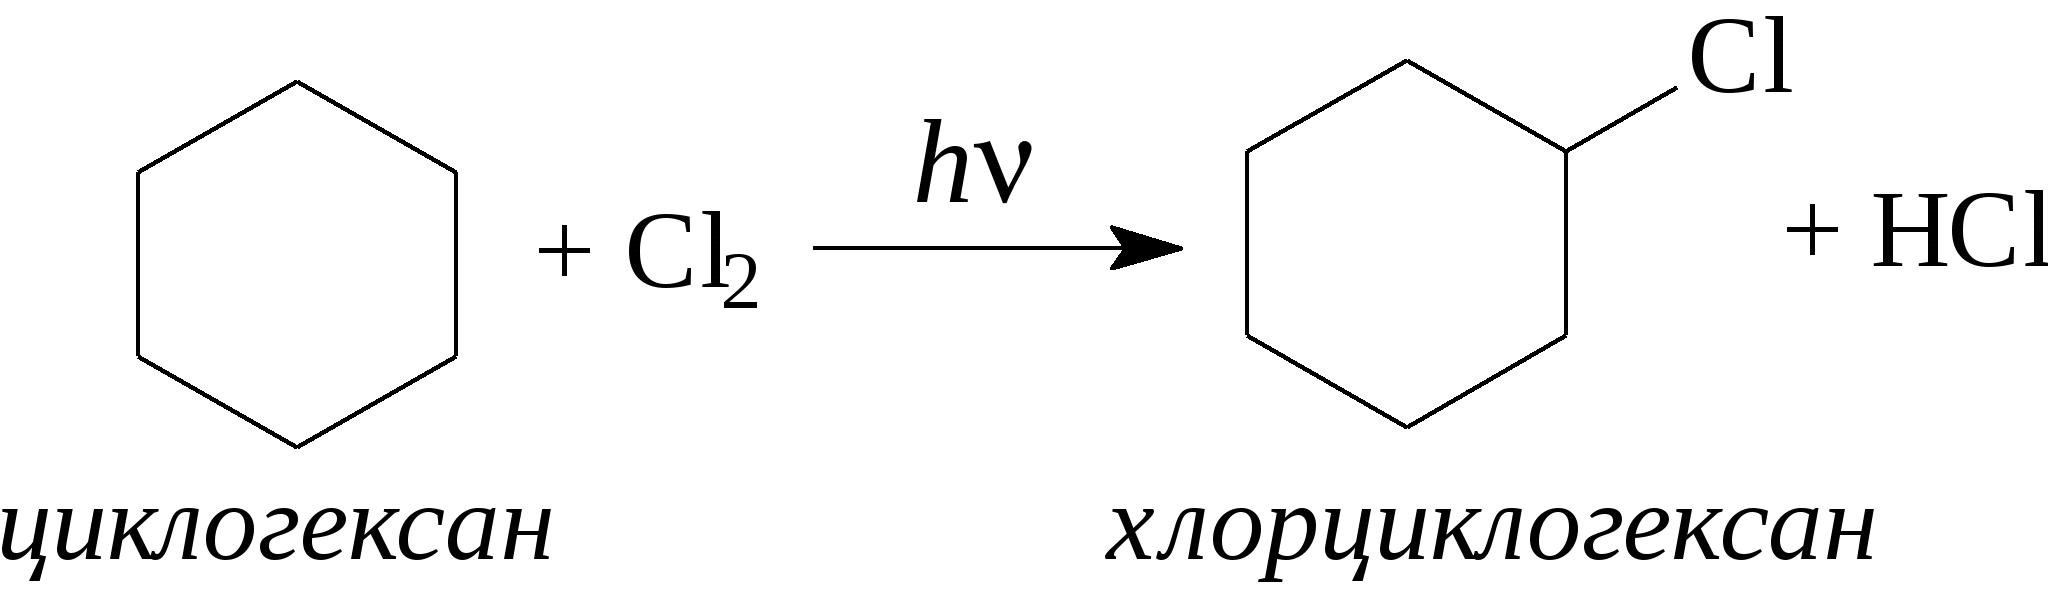 C2h5oh hcl. Сульфирование циклогексана реакция. Нитрование циклопентана. Циклогексен плюс Солная кислота. Циклогексан и азотная кислота реакция.